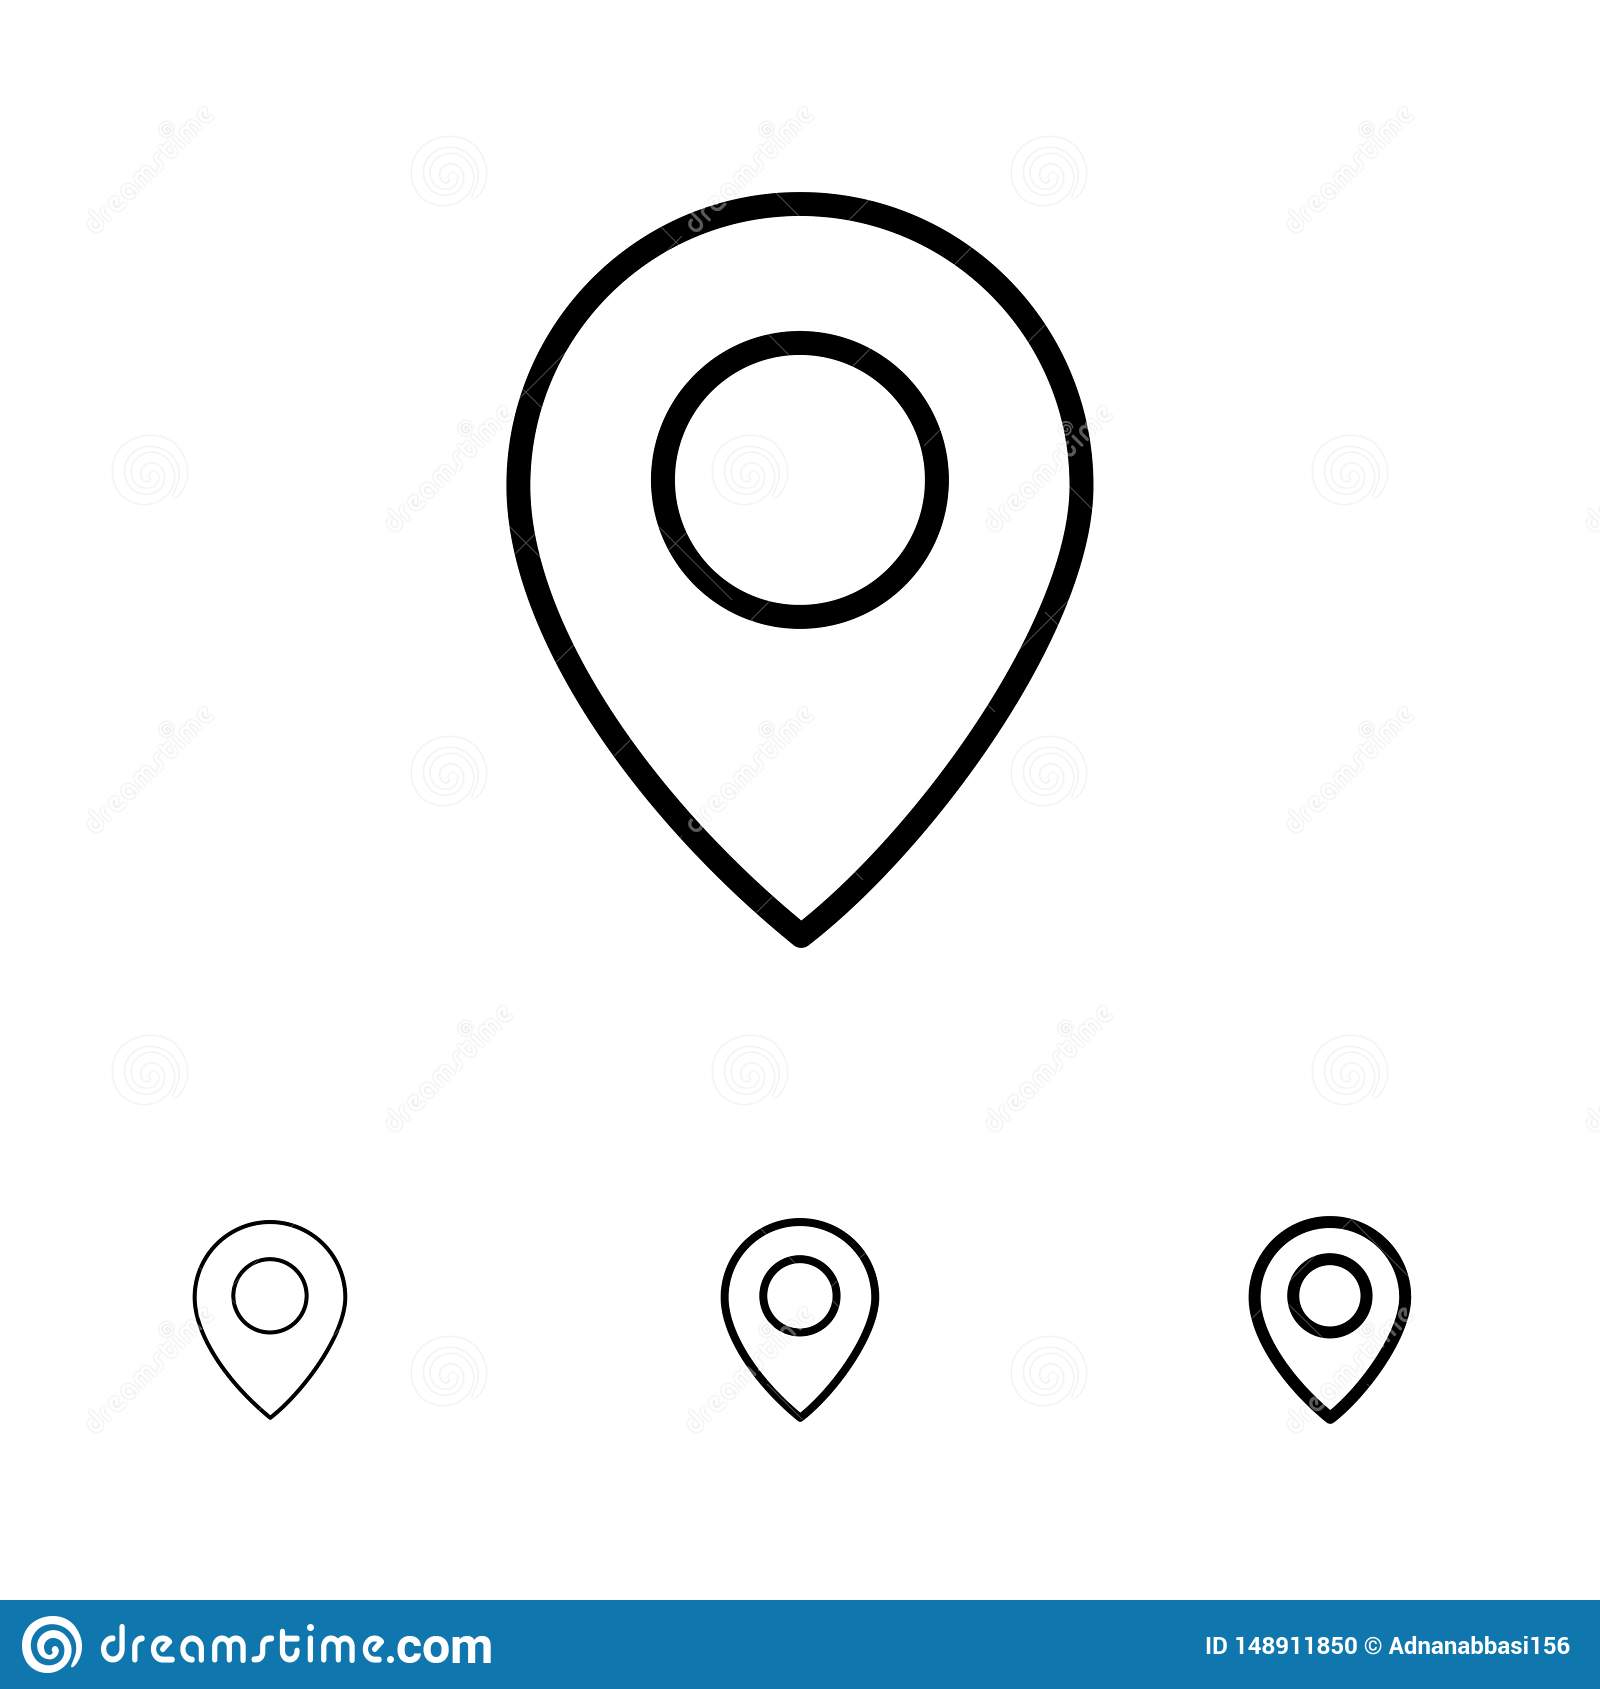 twitter-location-map, narendra modi reply twitter 